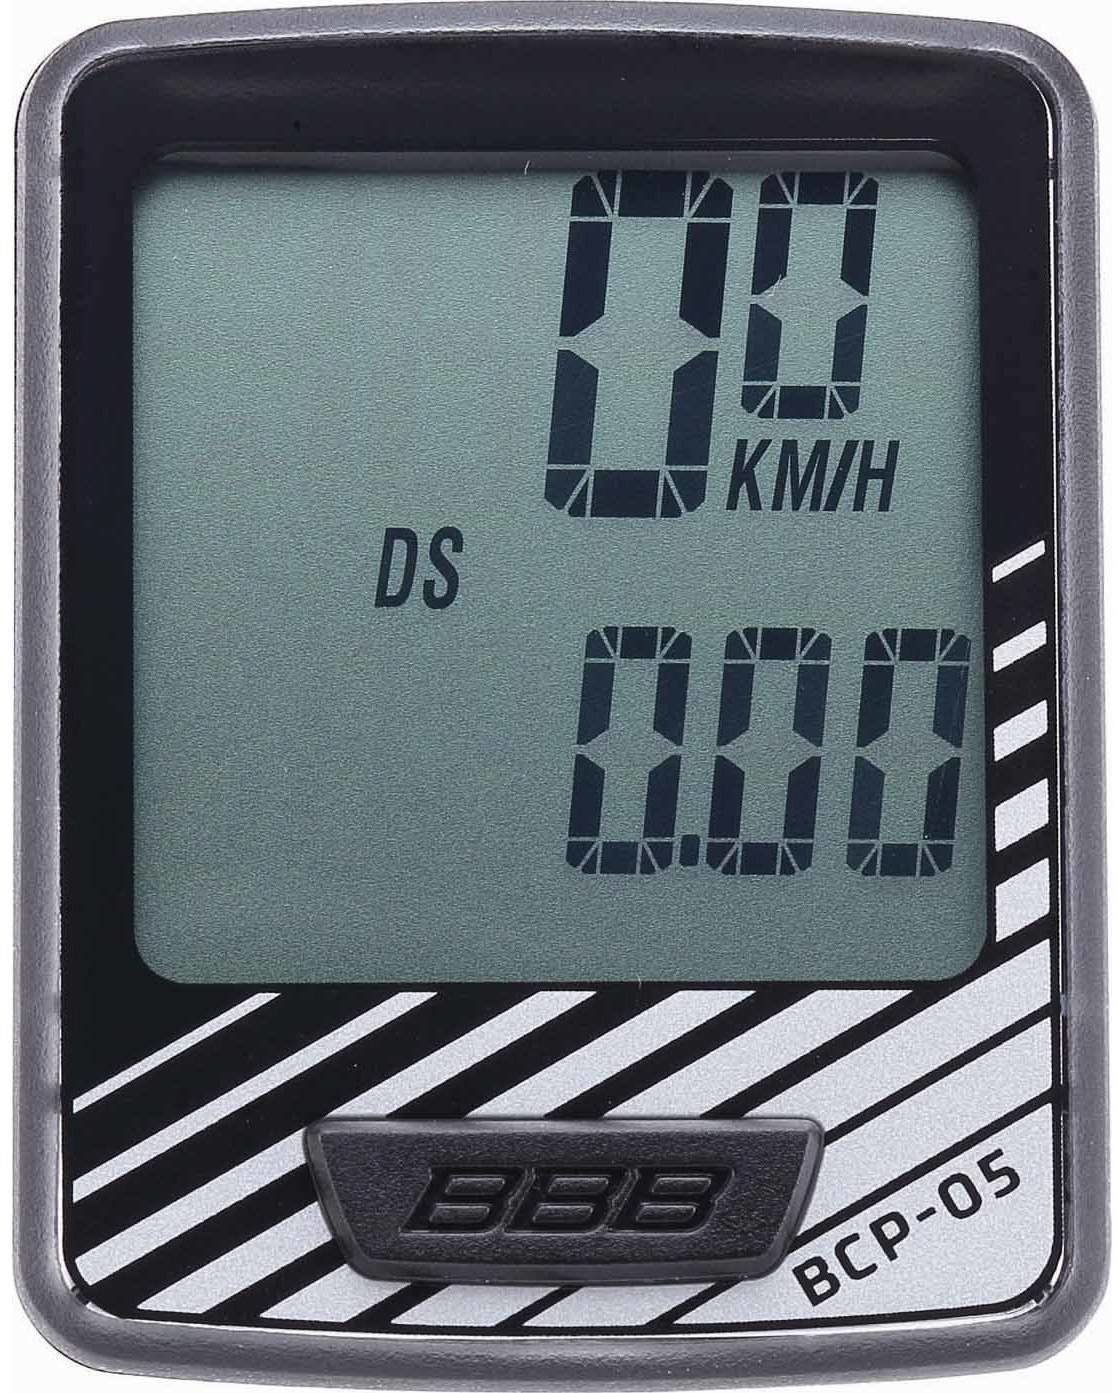 Électronique cycliste BBB DashBoard 7